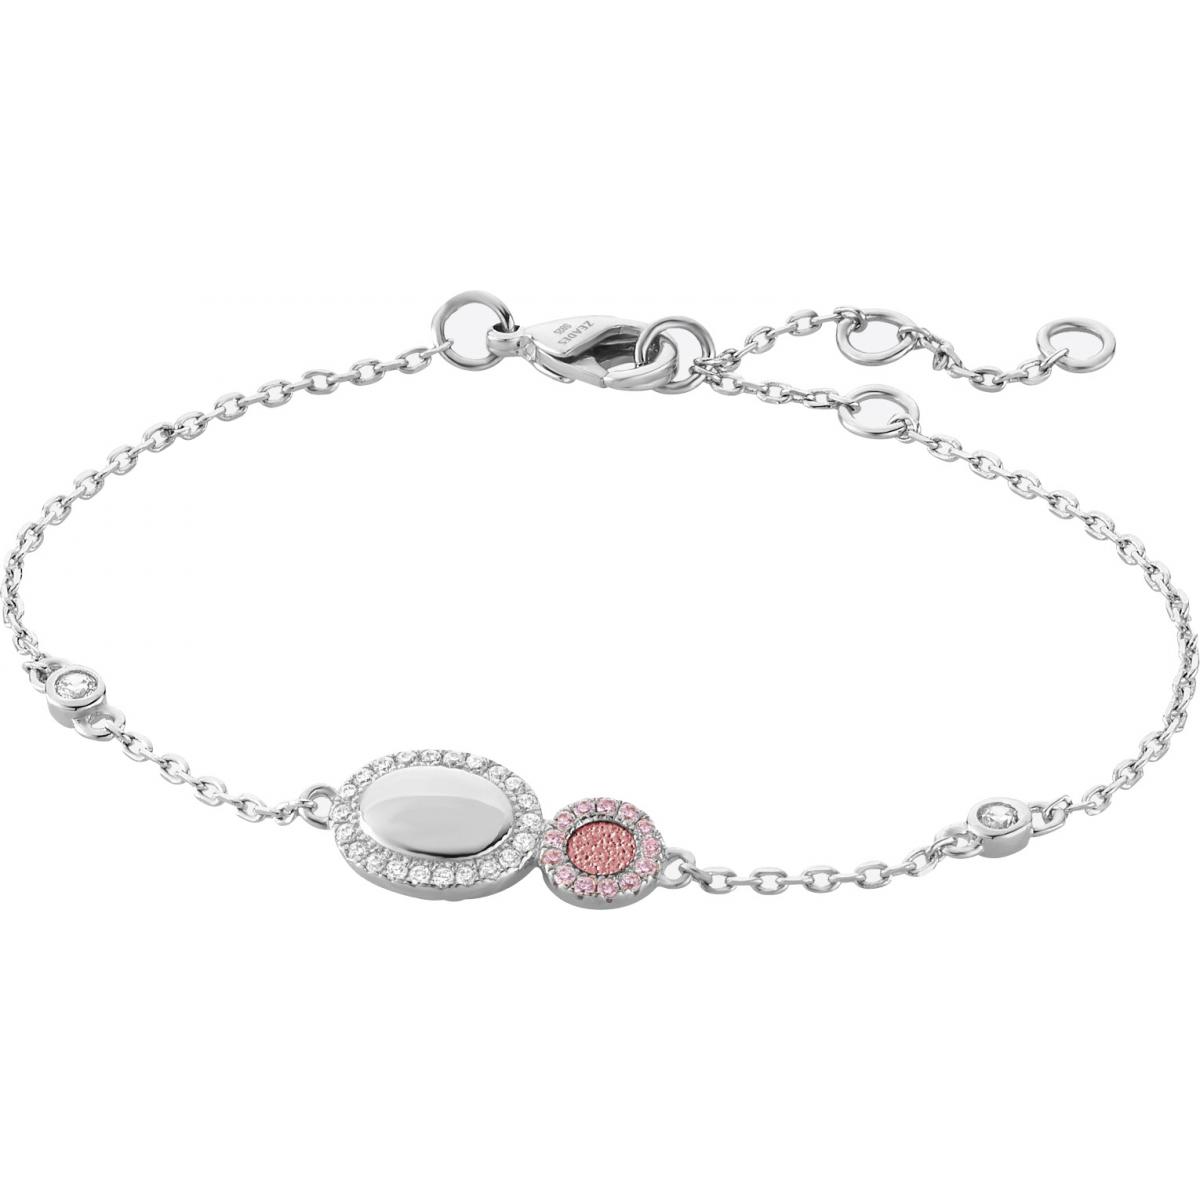 Bracelet Zeades Sbc01020 - Bracelet Or Rose Cuir Cristaux Femme